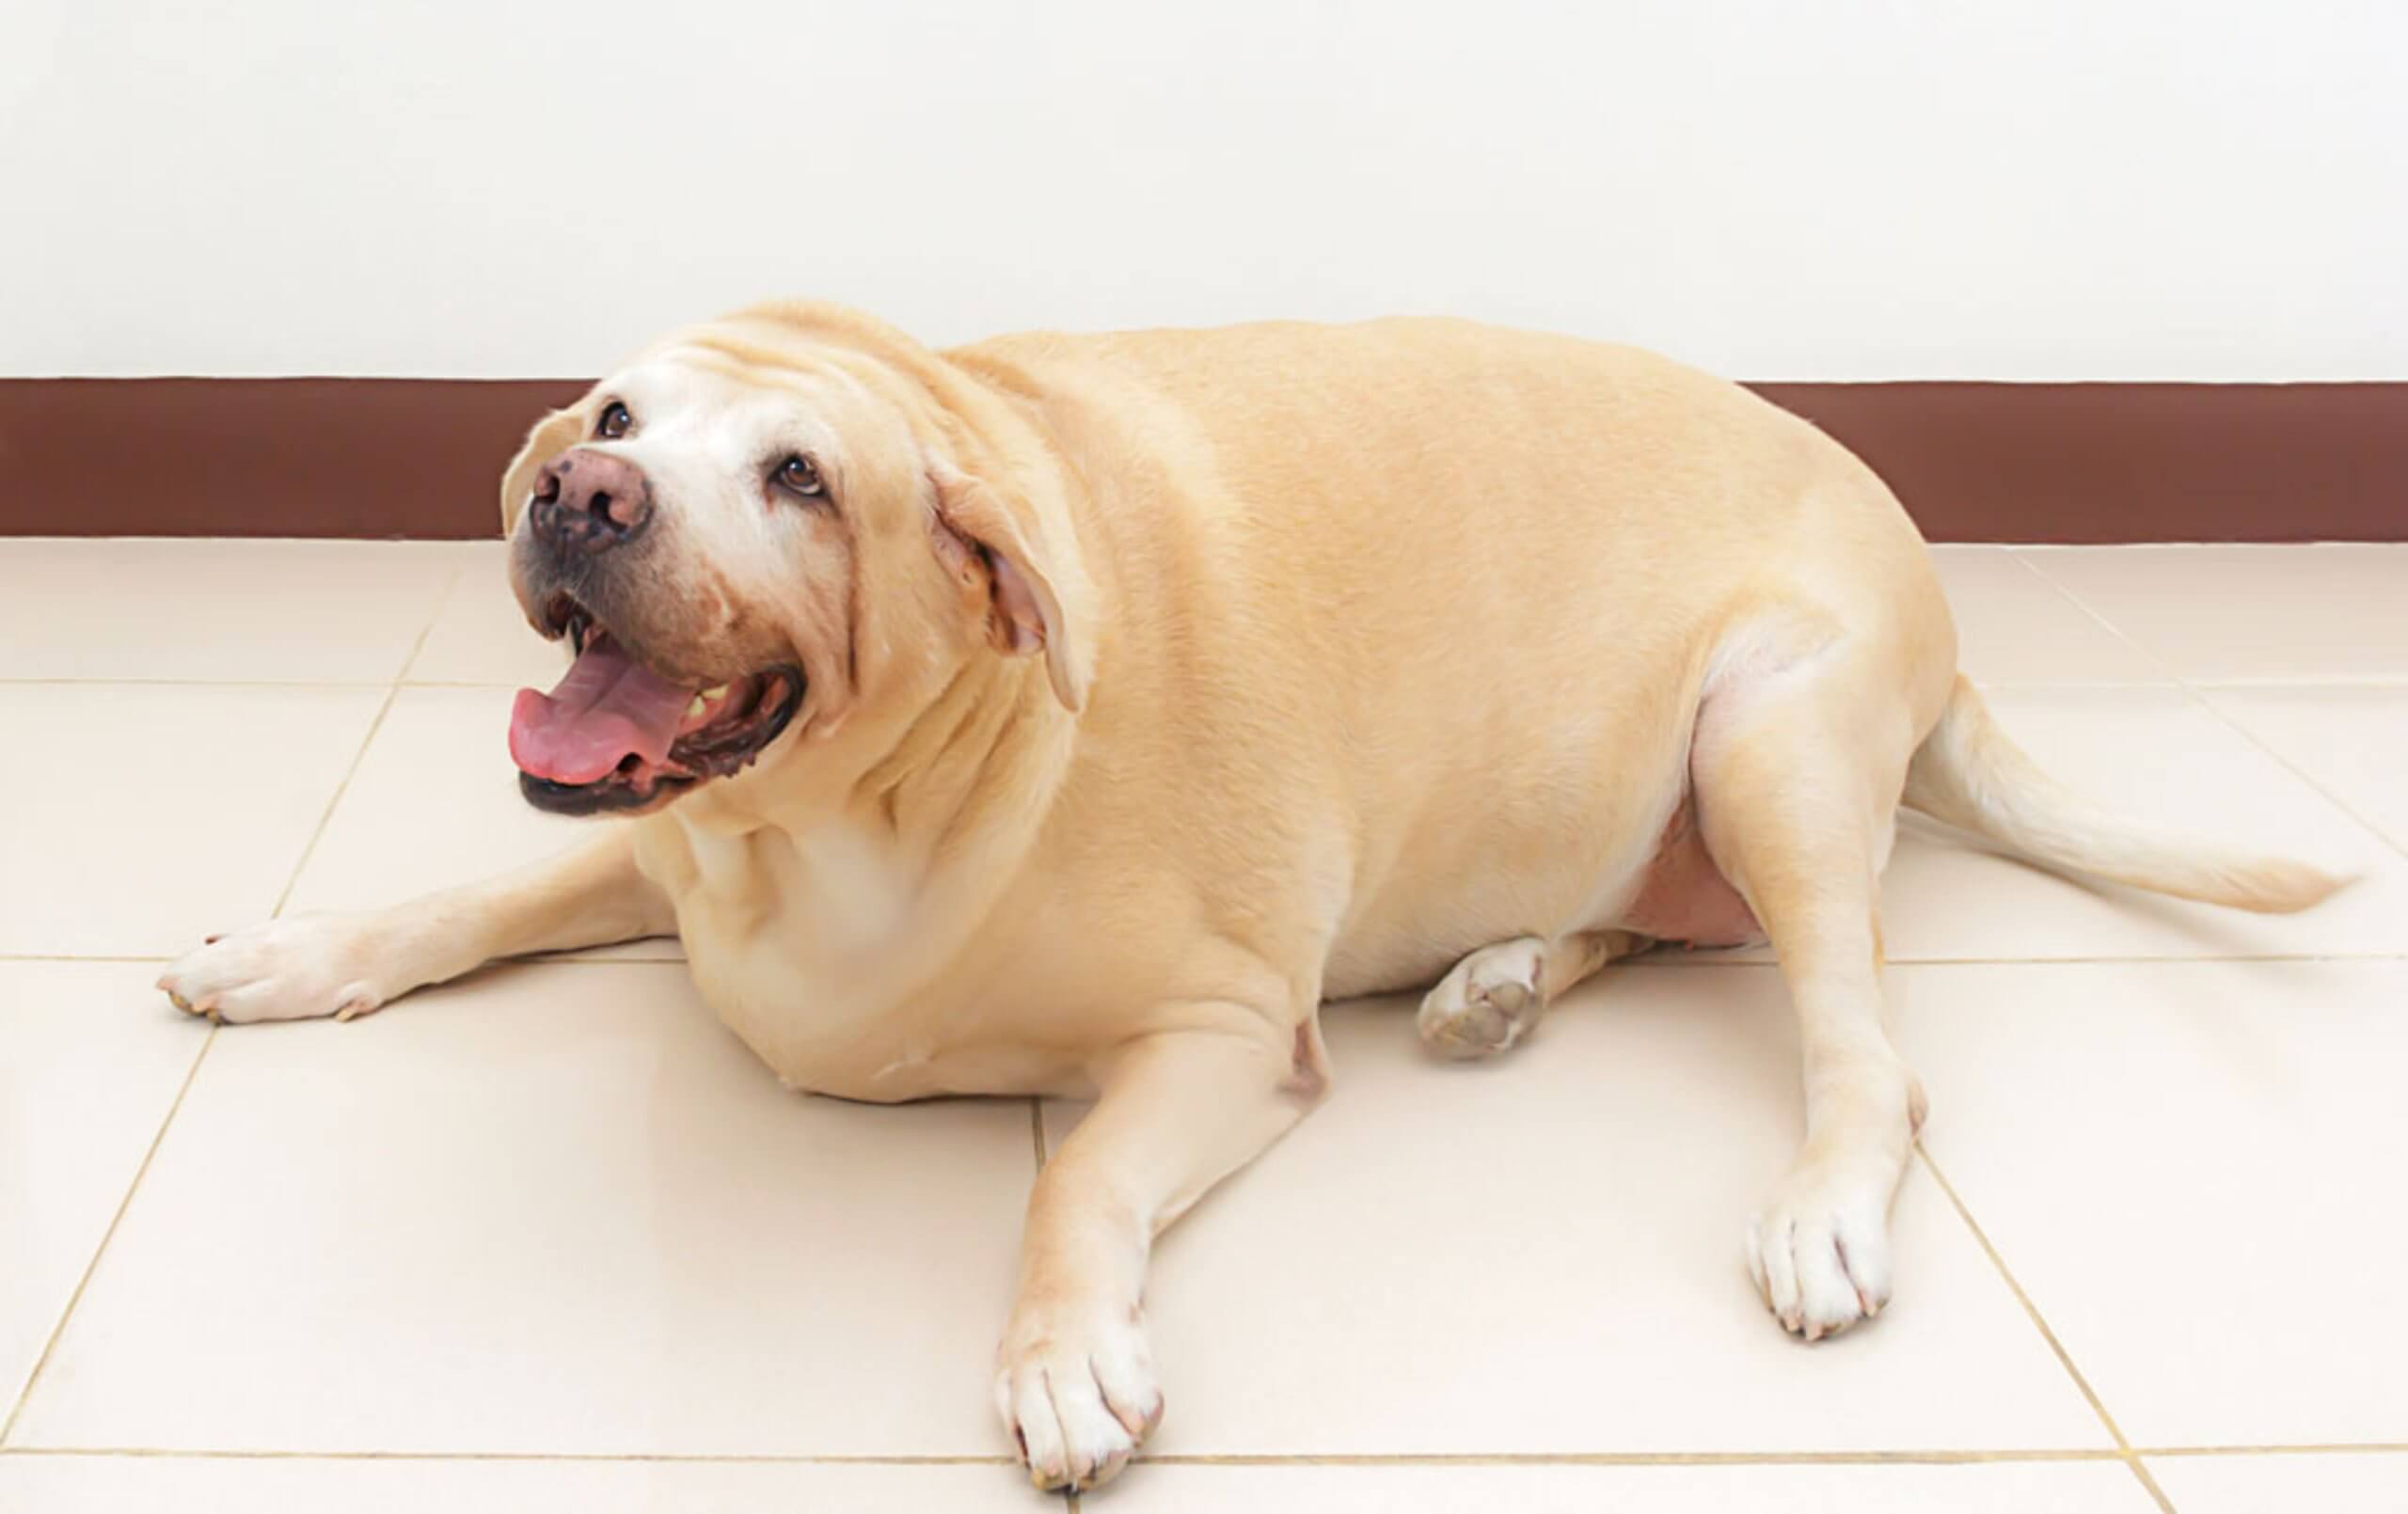 How to avoid dog obesity